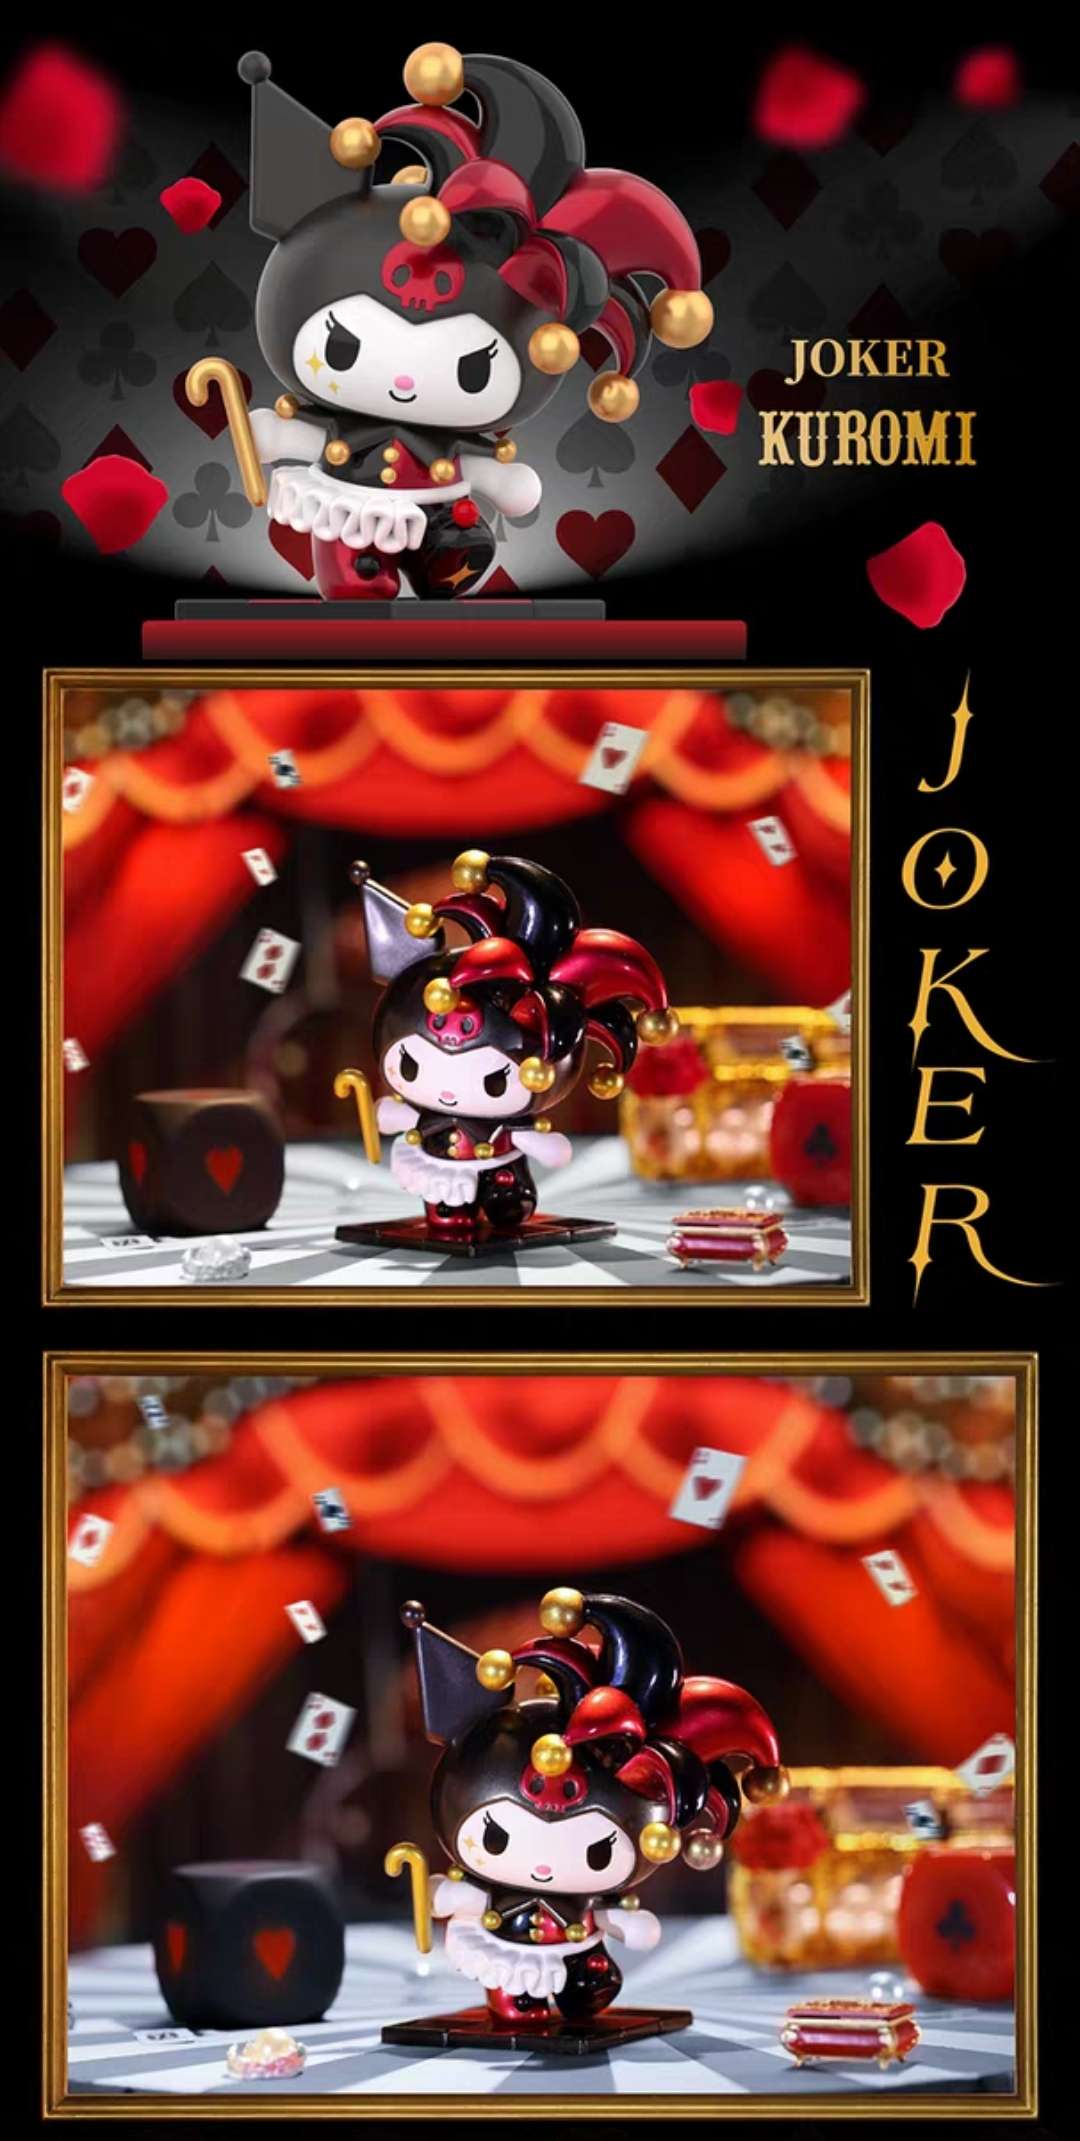 joker kuromi poker figure toy blindbox